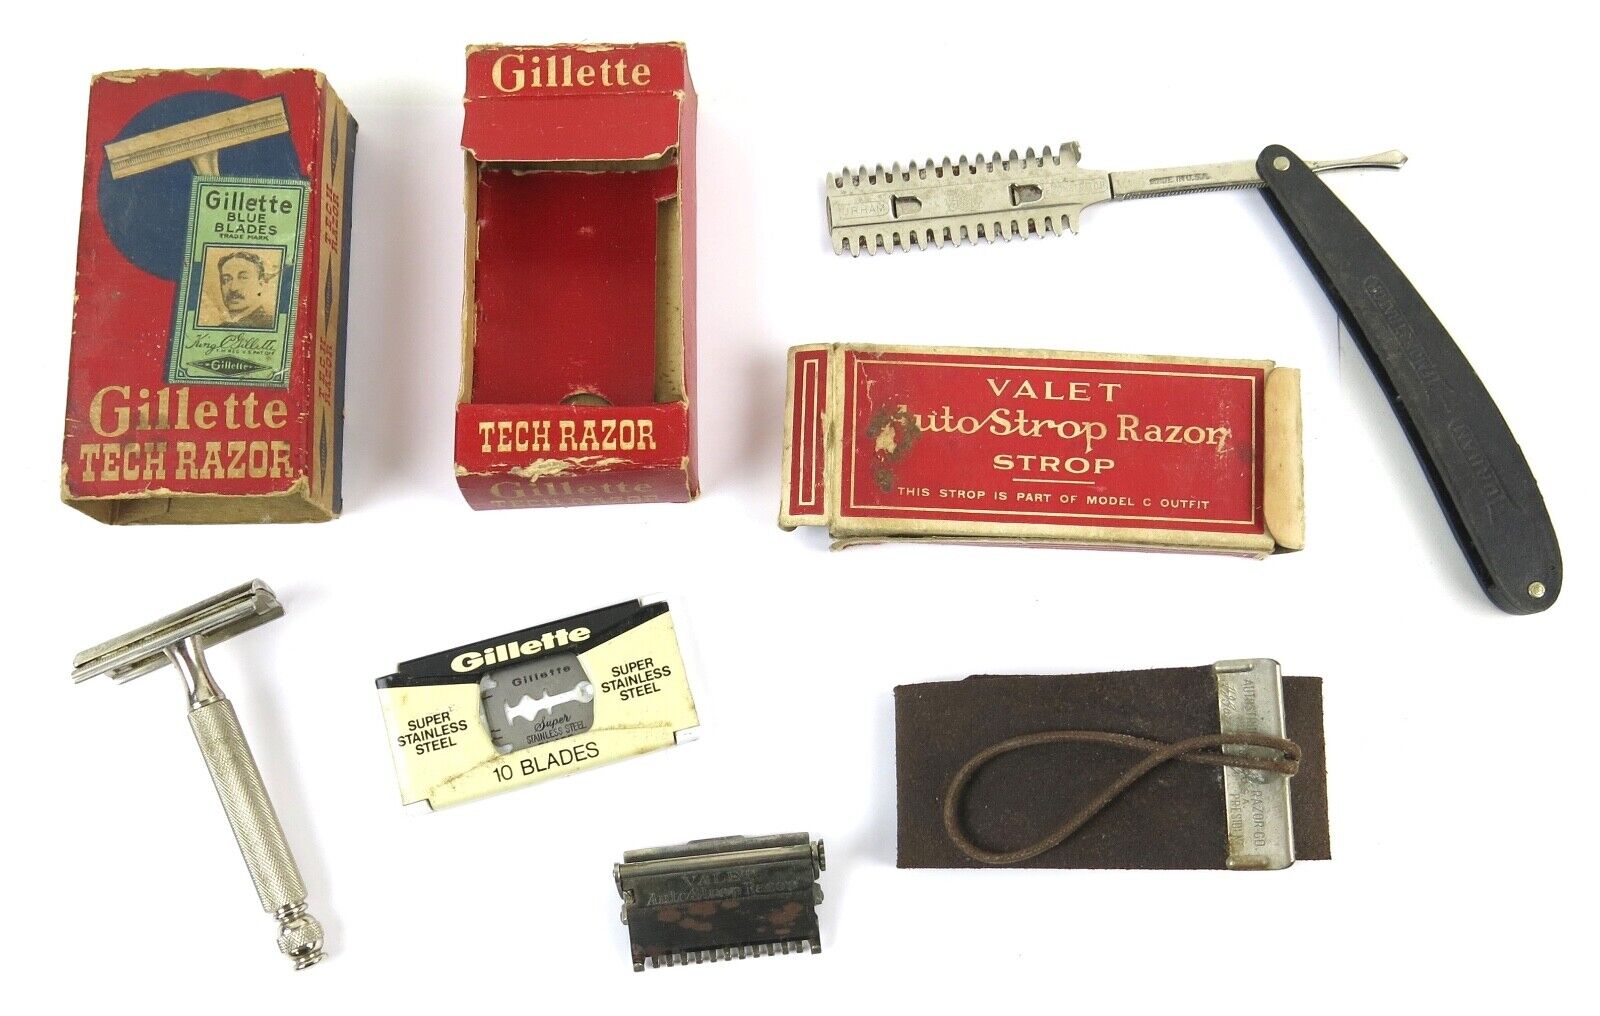 Vintage Lot of Gillette Tech Razor, Auto Strop Strap, Durham Demonstrator, Etc